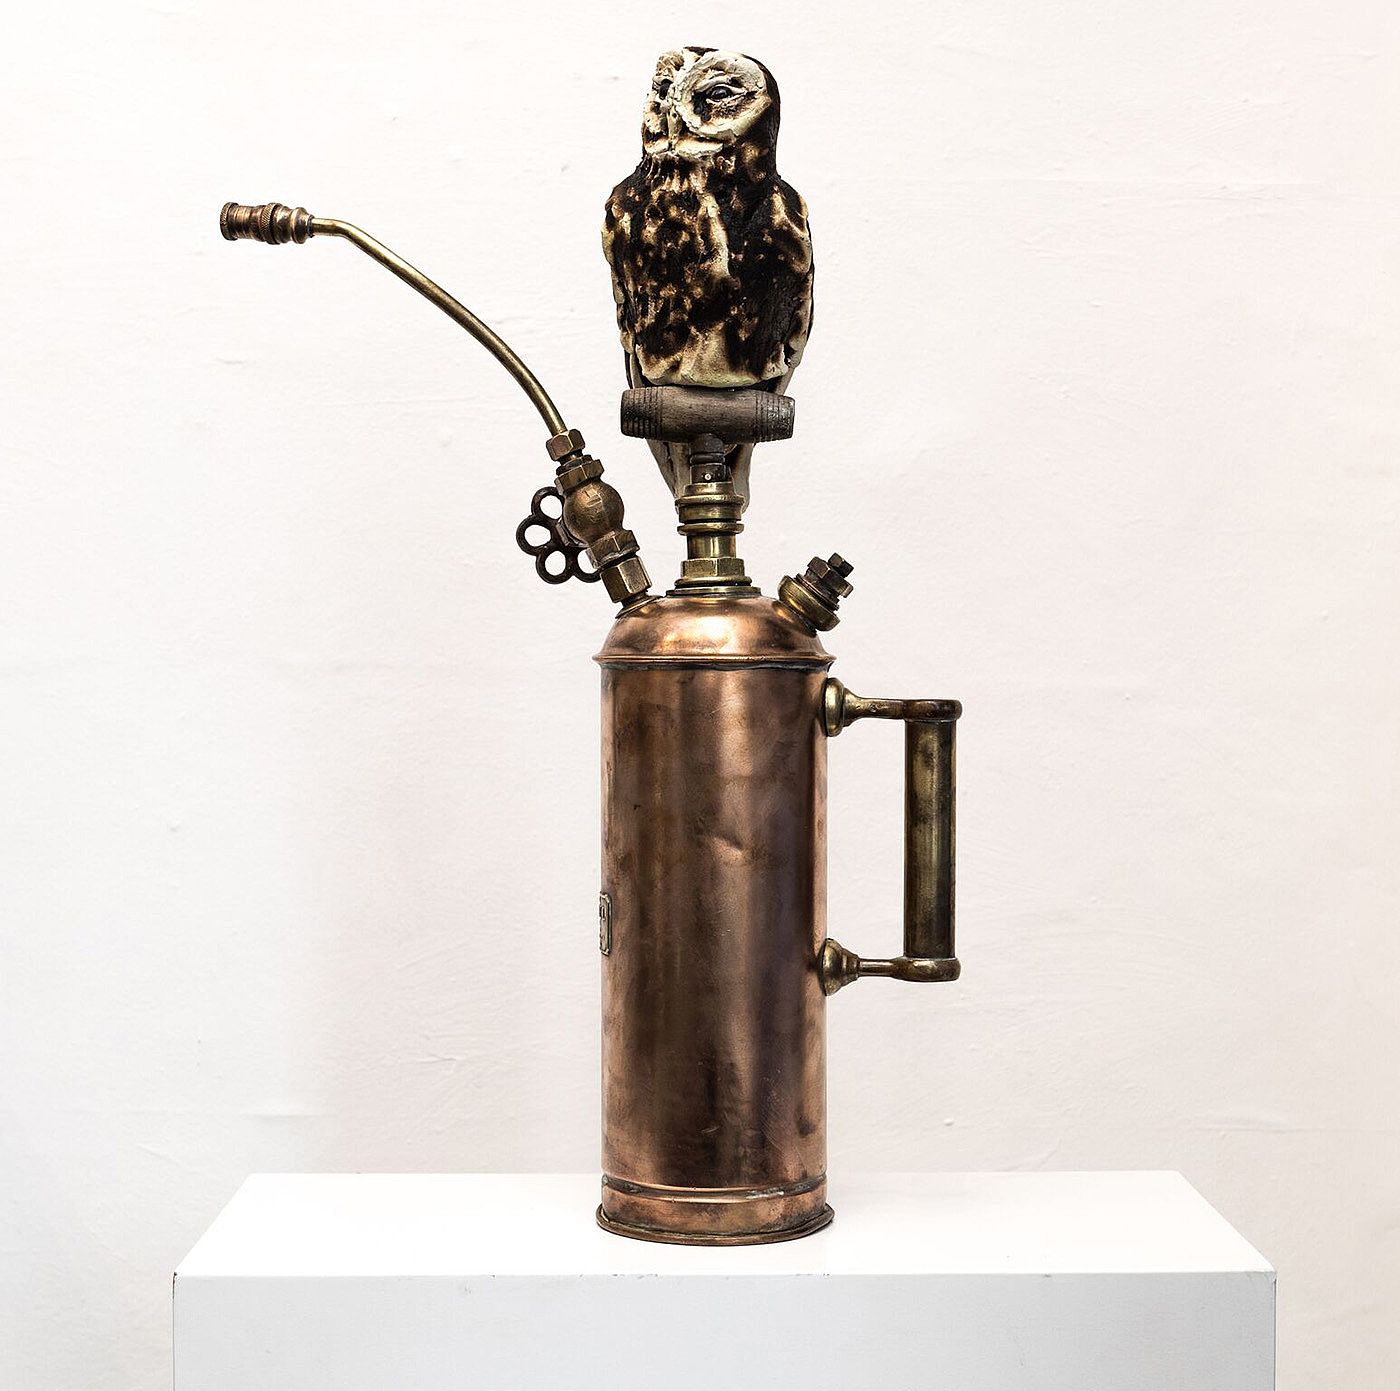 Owl on Large sprayer 3 by Carol Read Richard Ballantyne